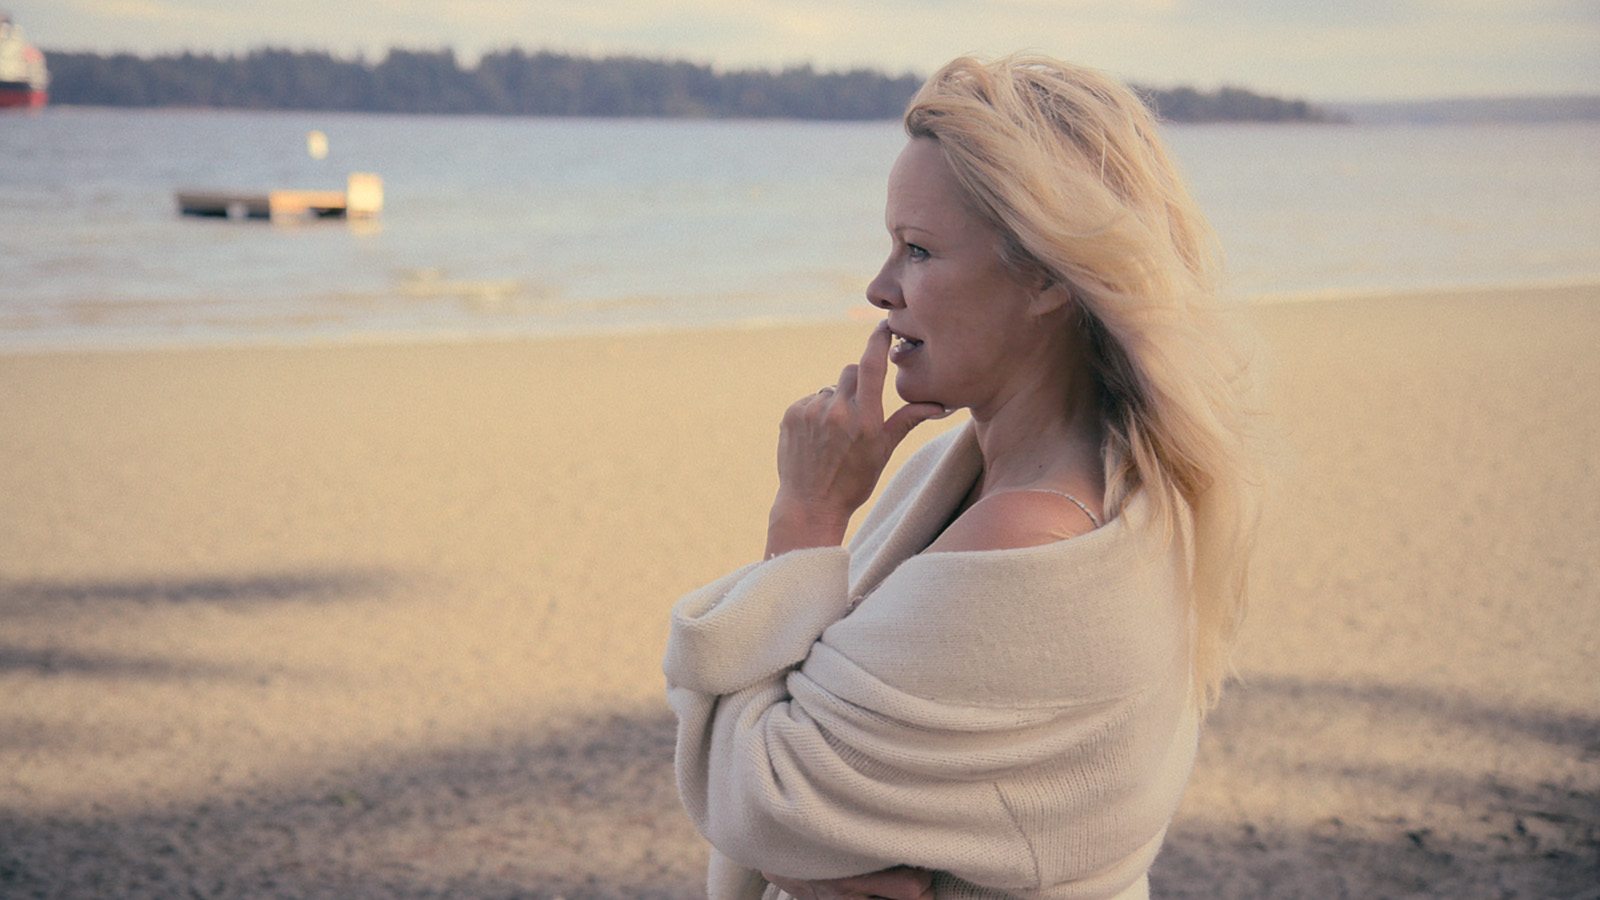 Pamela Anderson: 3 shocking revelations from the Netflix documentary